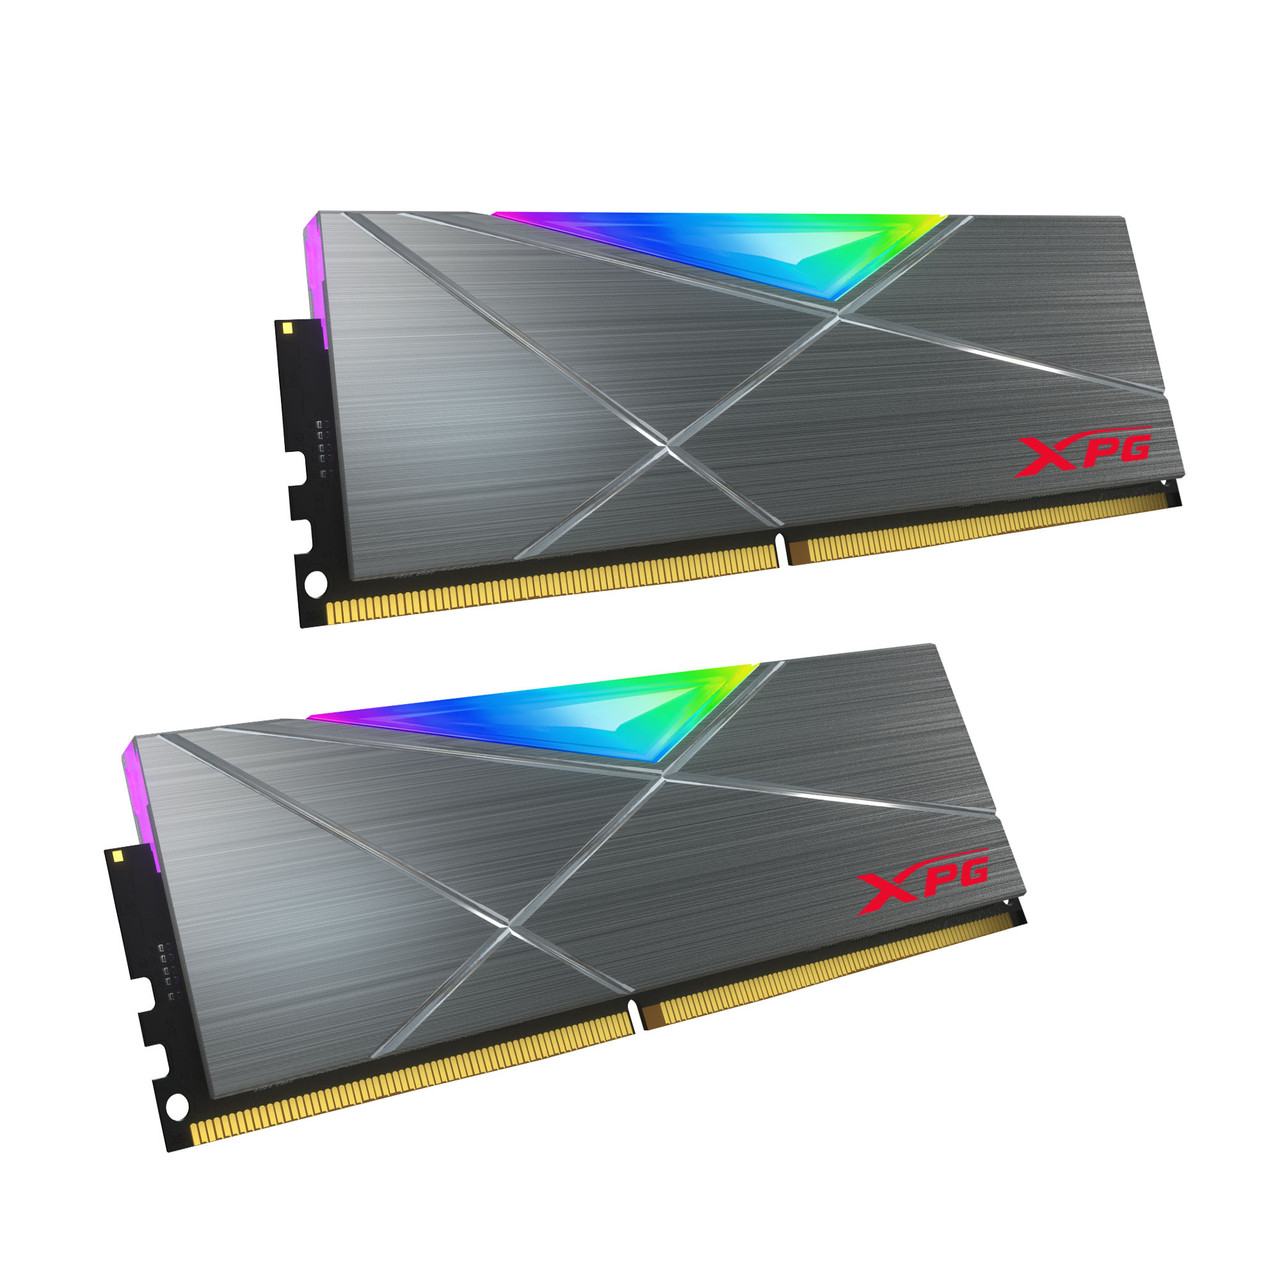 XPG SPECTRIX D50 RGB Desktop Memory: 16GB (2x8GB) DDR4 3200MHz